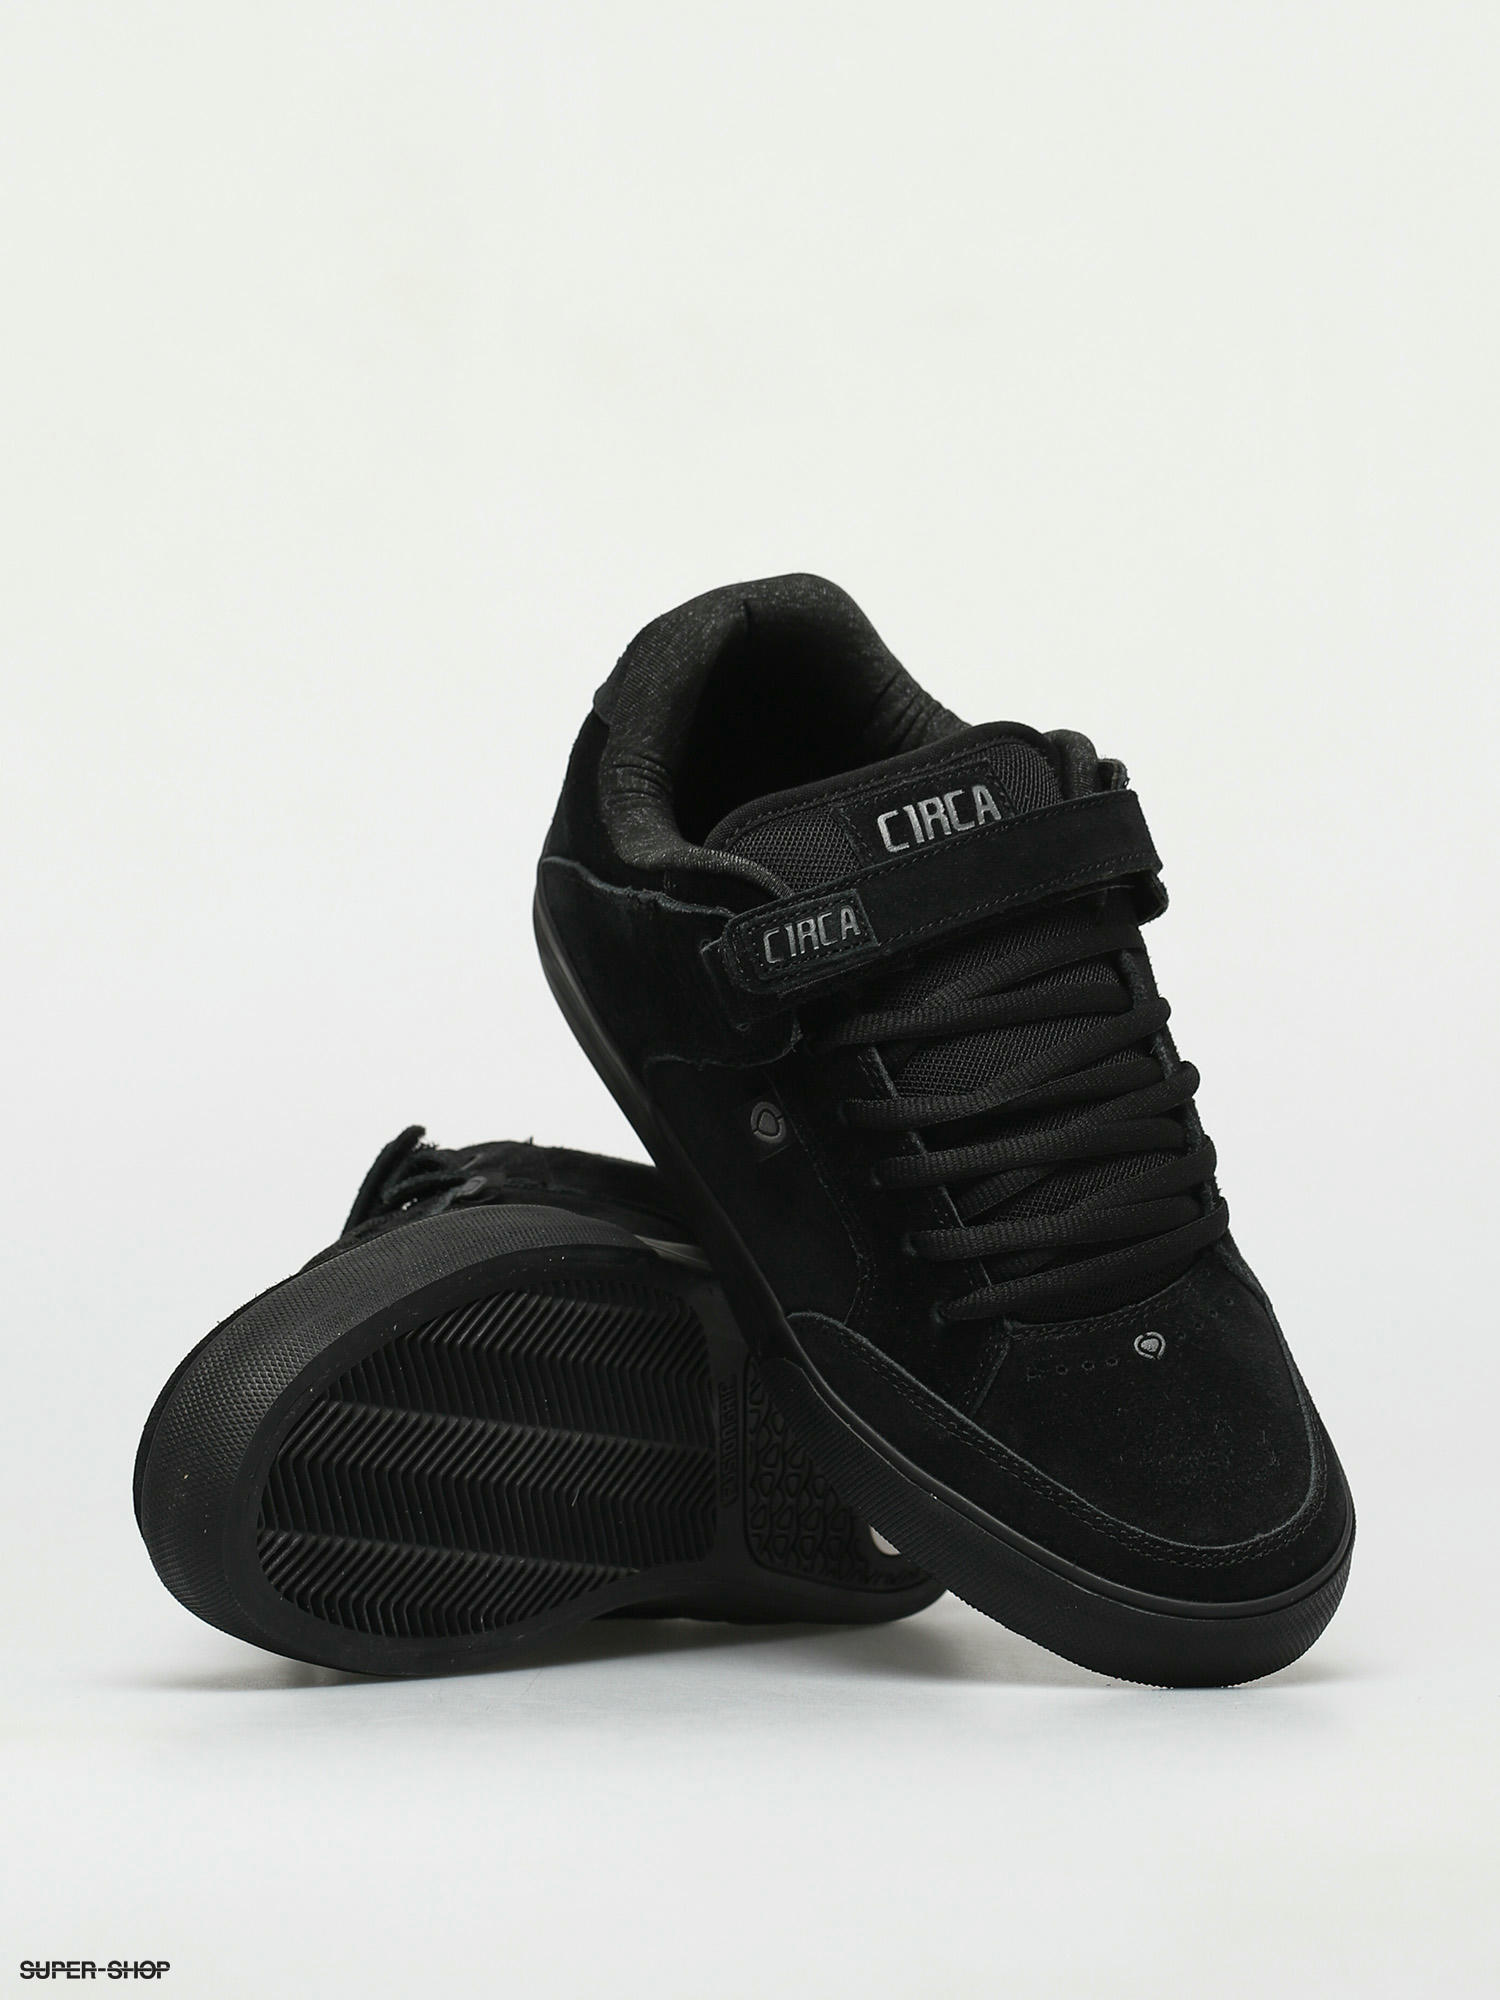 Circa 205 Vulc Shoes (black/black)